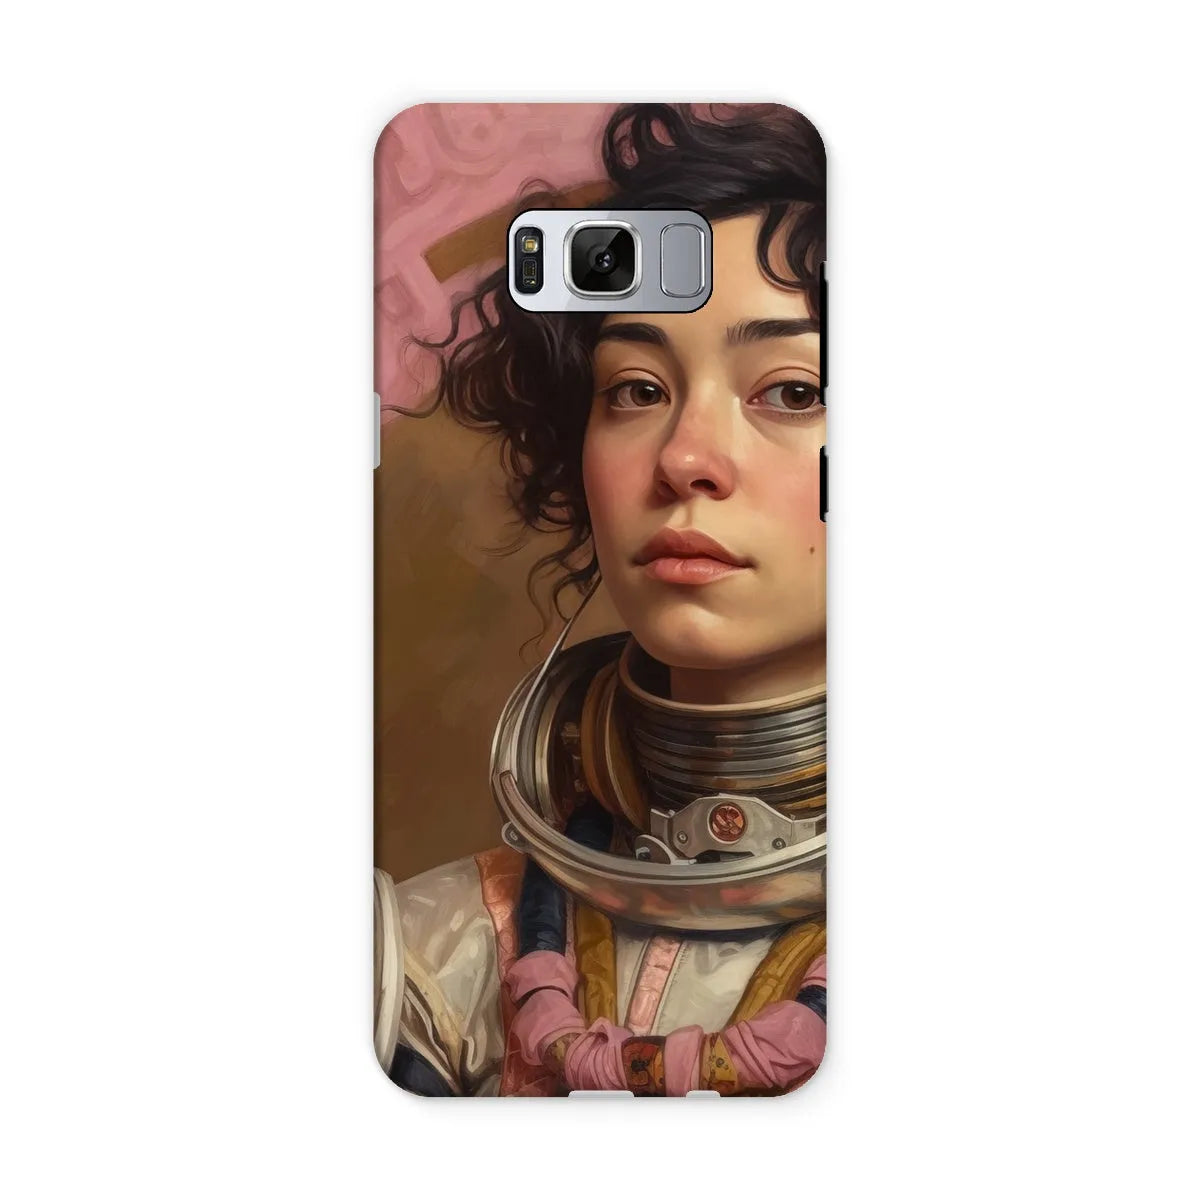 Faustina The Lesbian Astronaut - Lgbtq Art Phone Case - Samsung Galaxy S8 / Matte - Mobile Phone Cases - Aesthetic Art